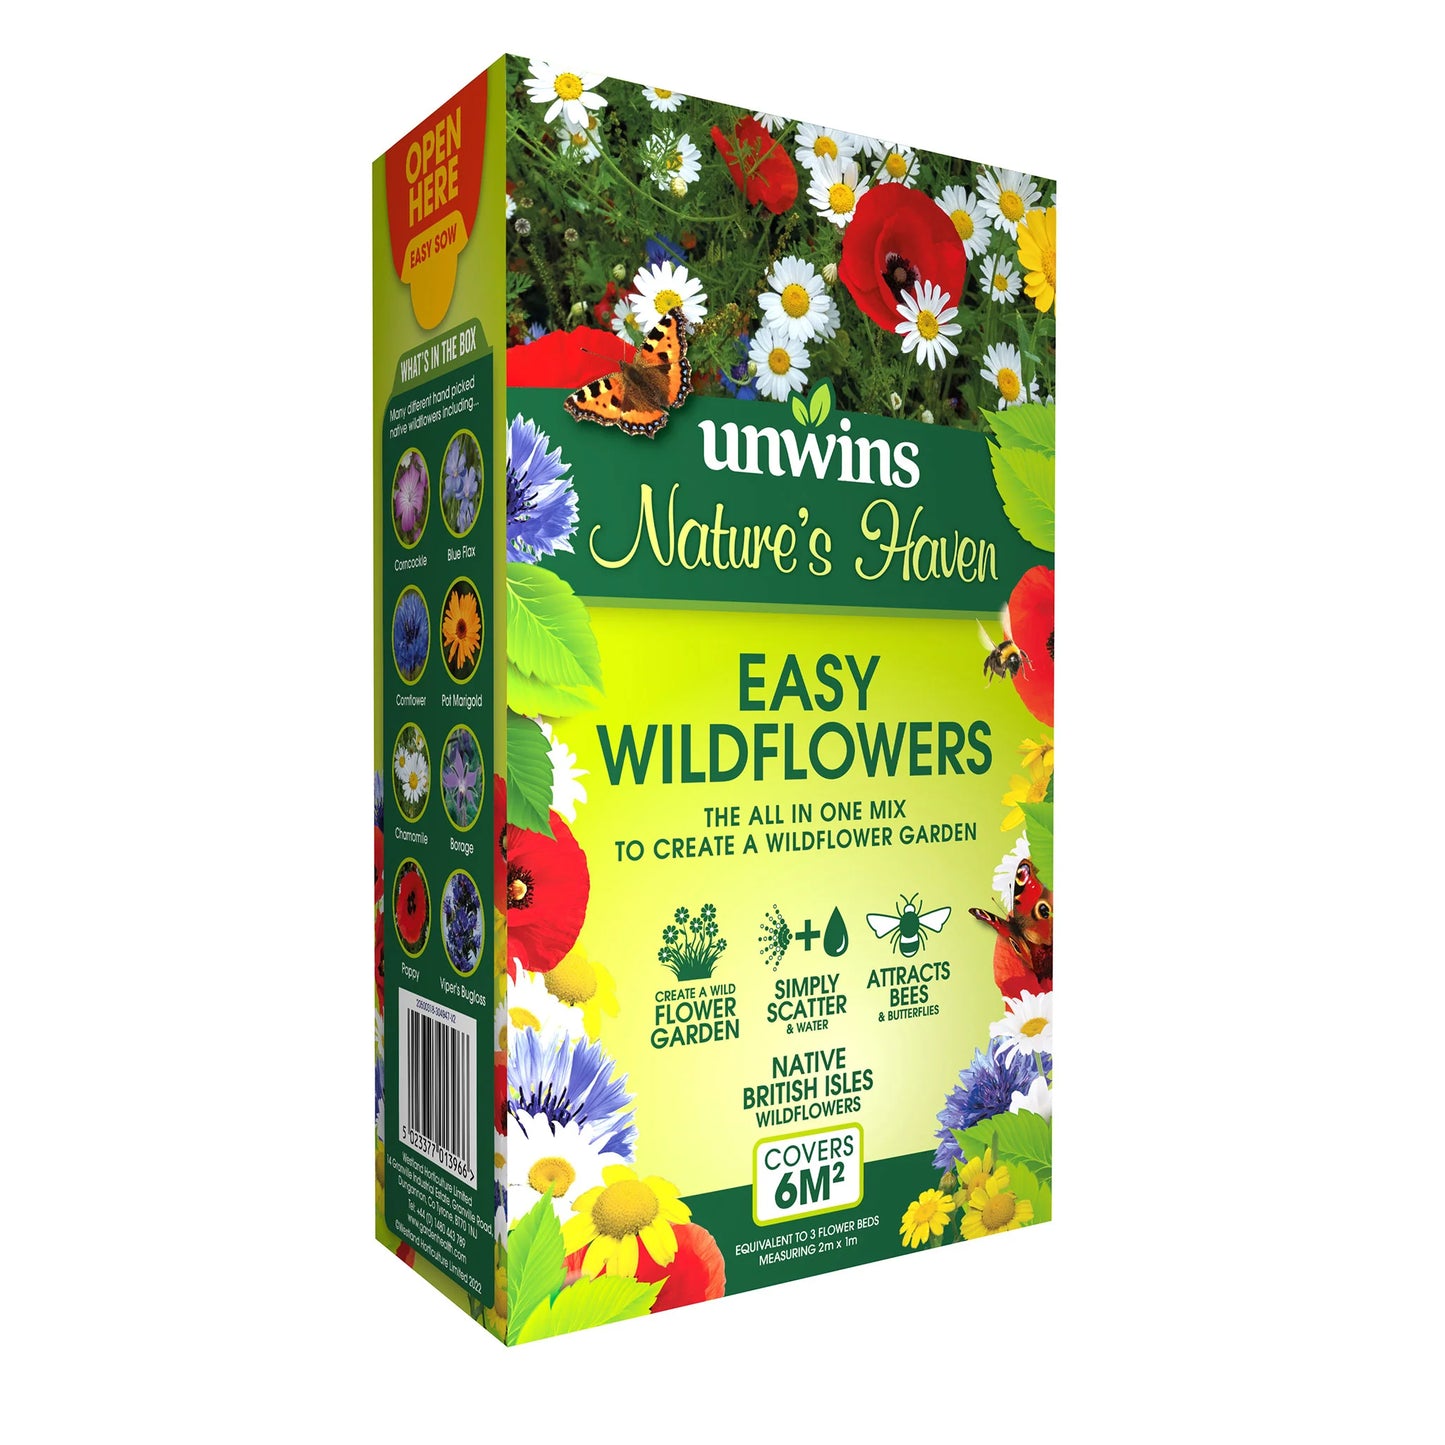 Westland Natures Haven Easy Wildflowers